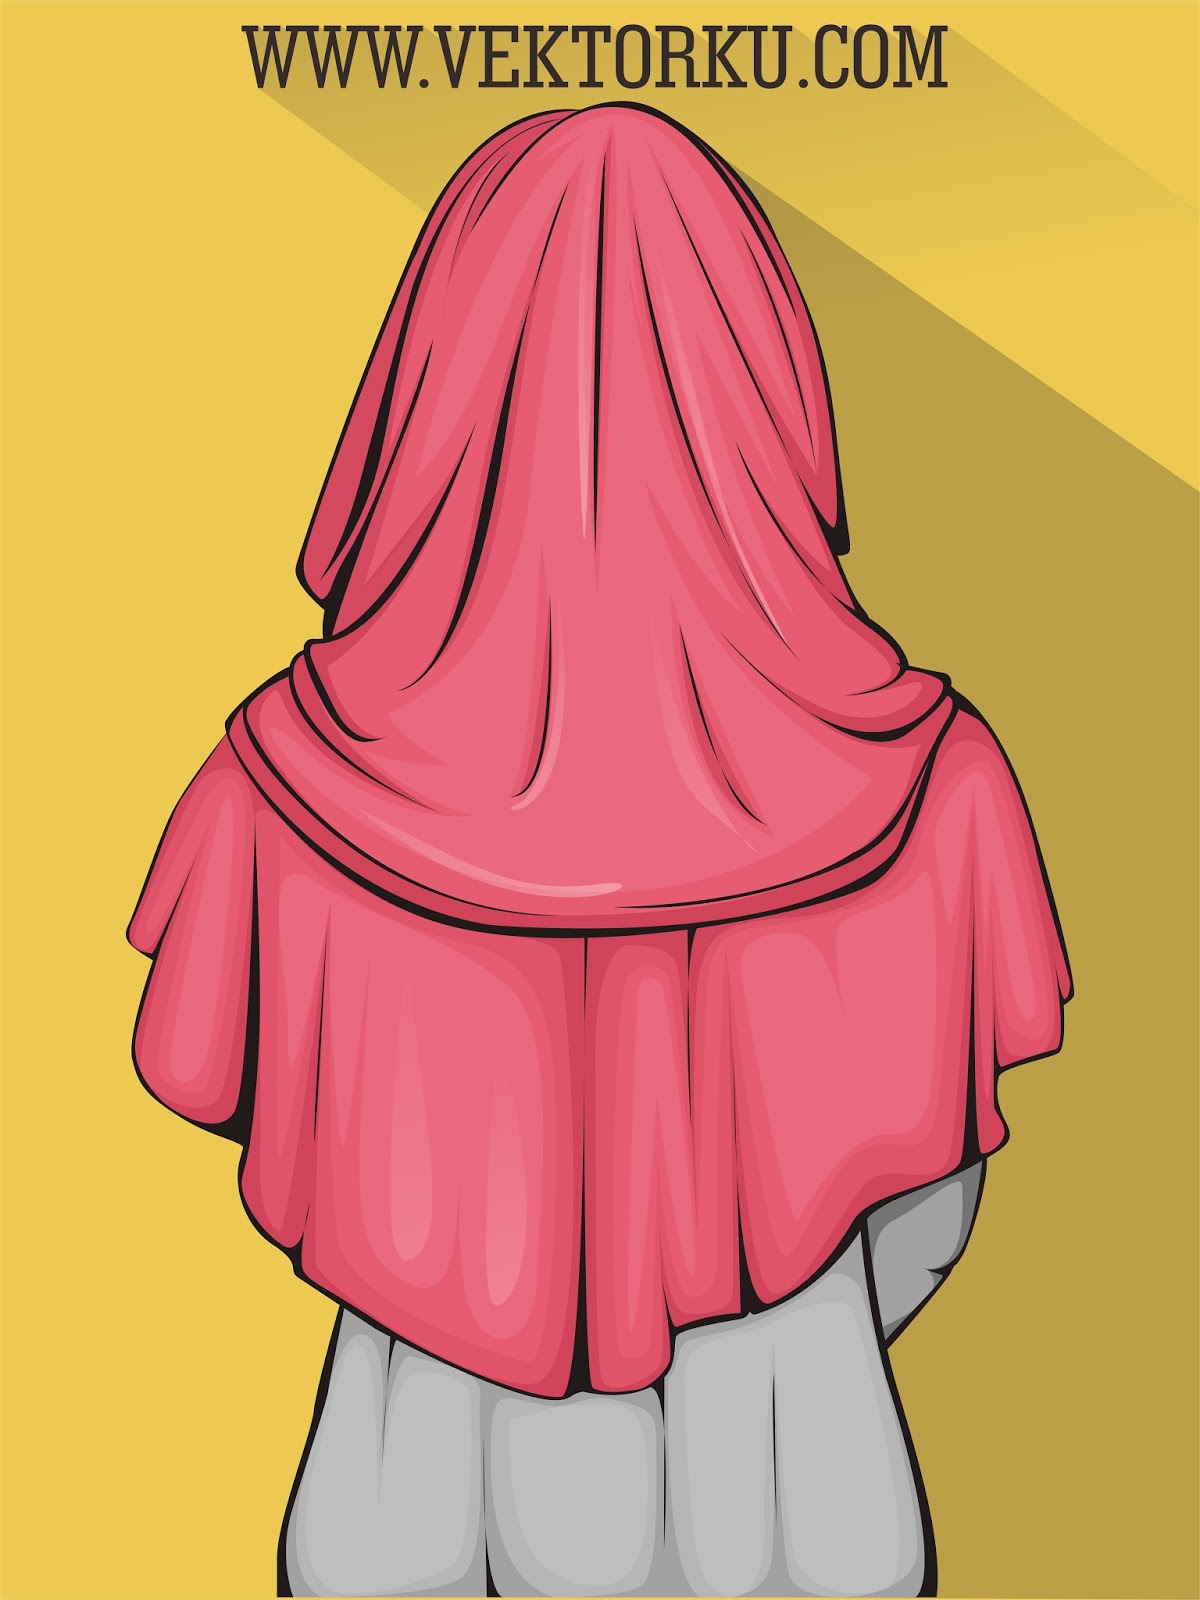 Downlaod Koleksi Gambar Kartun Wanita Hijab Dari Belakang Cartonmuslim